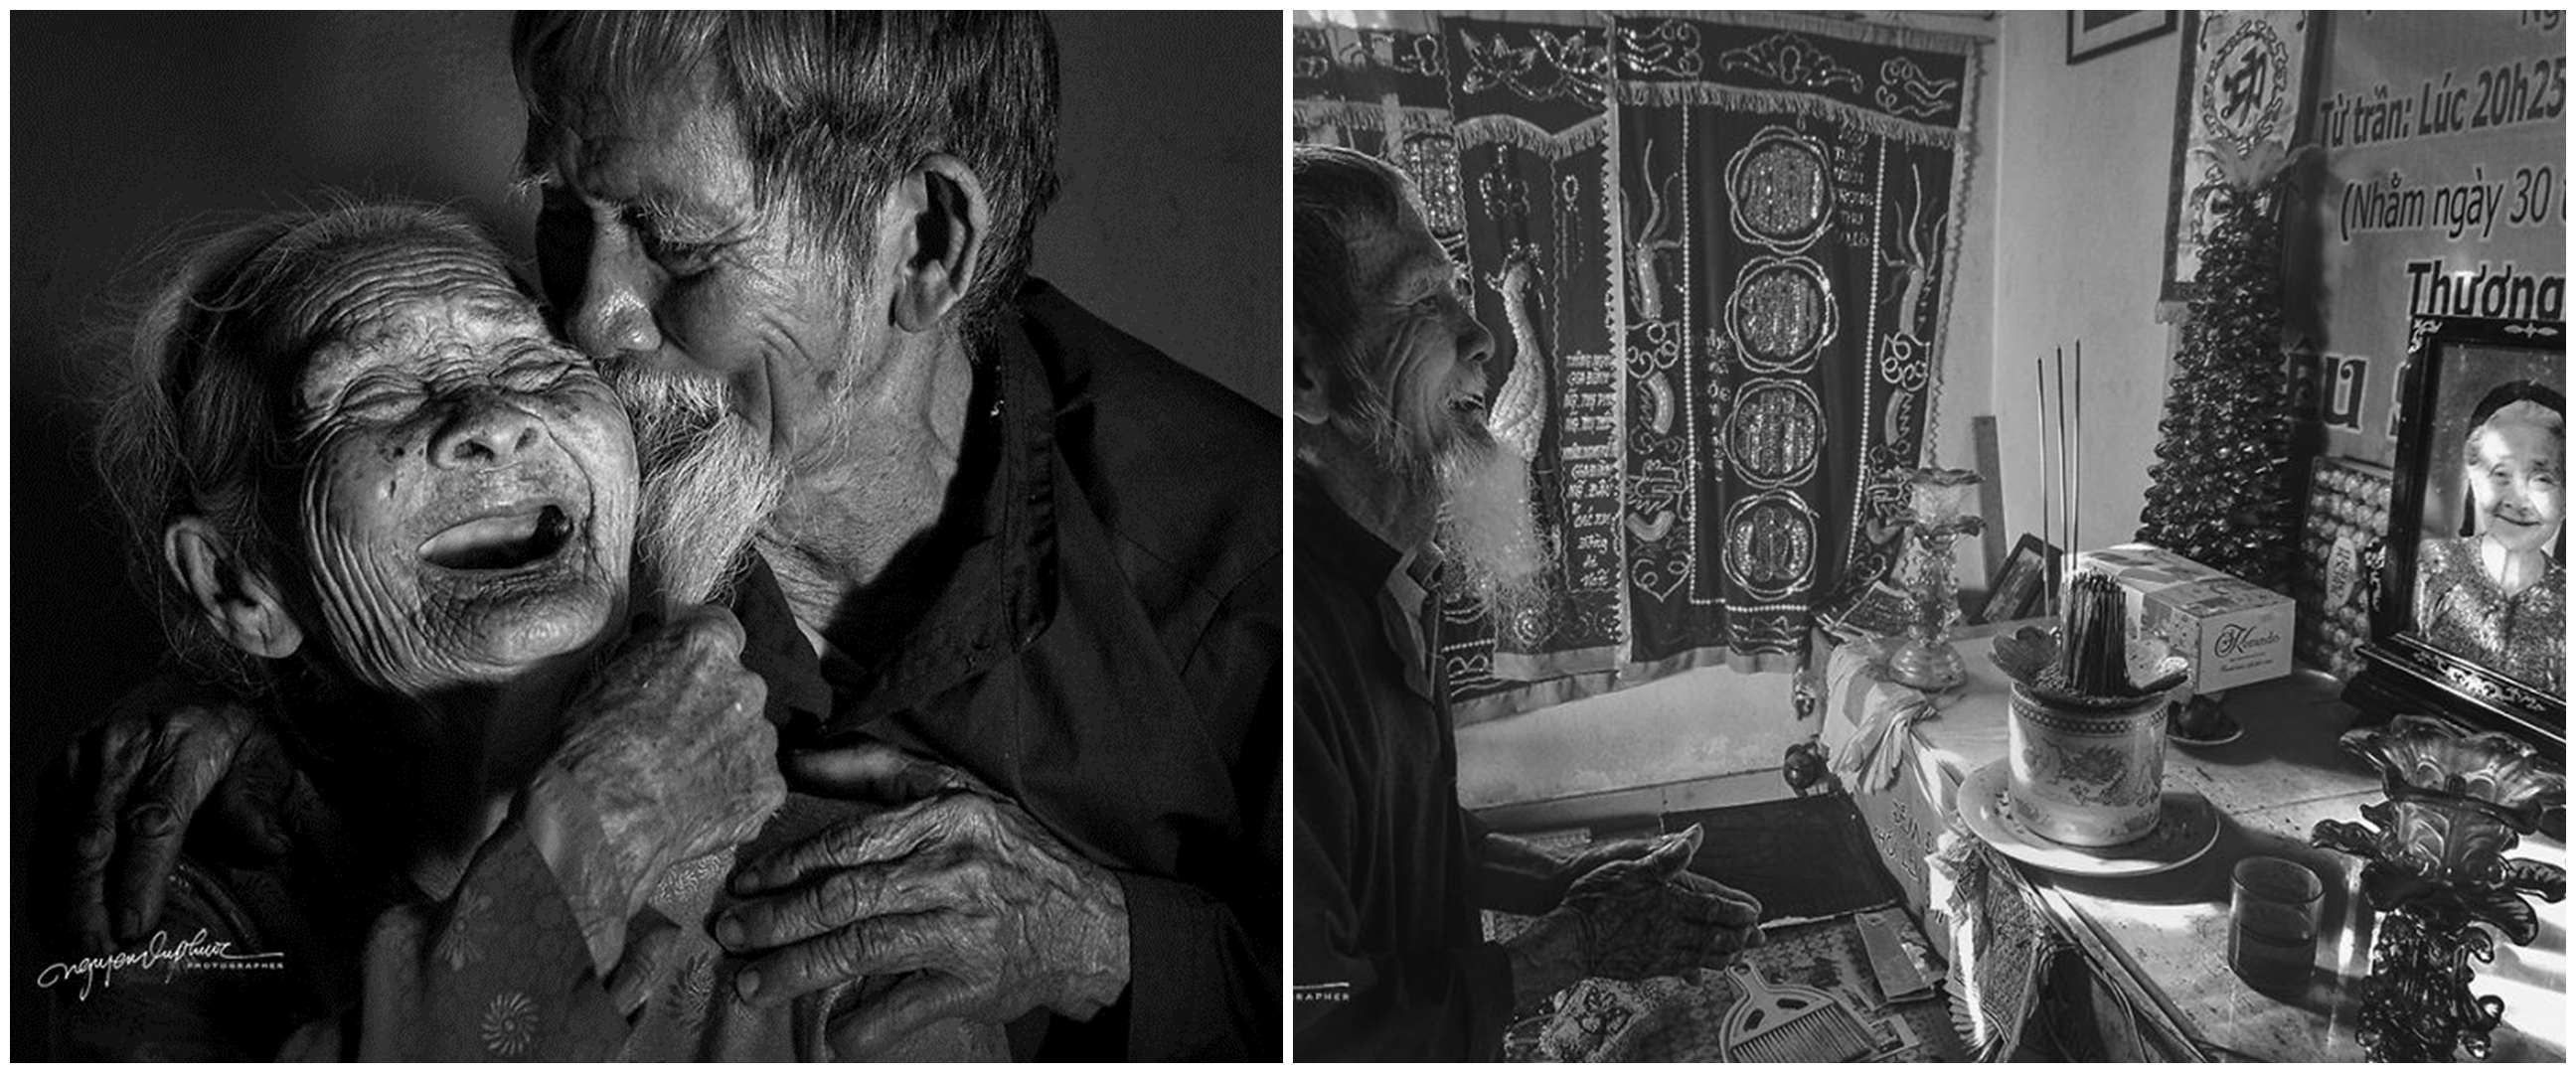 10 Potret viral pasangan lansia Vietnam, bersama sejak 1930-an